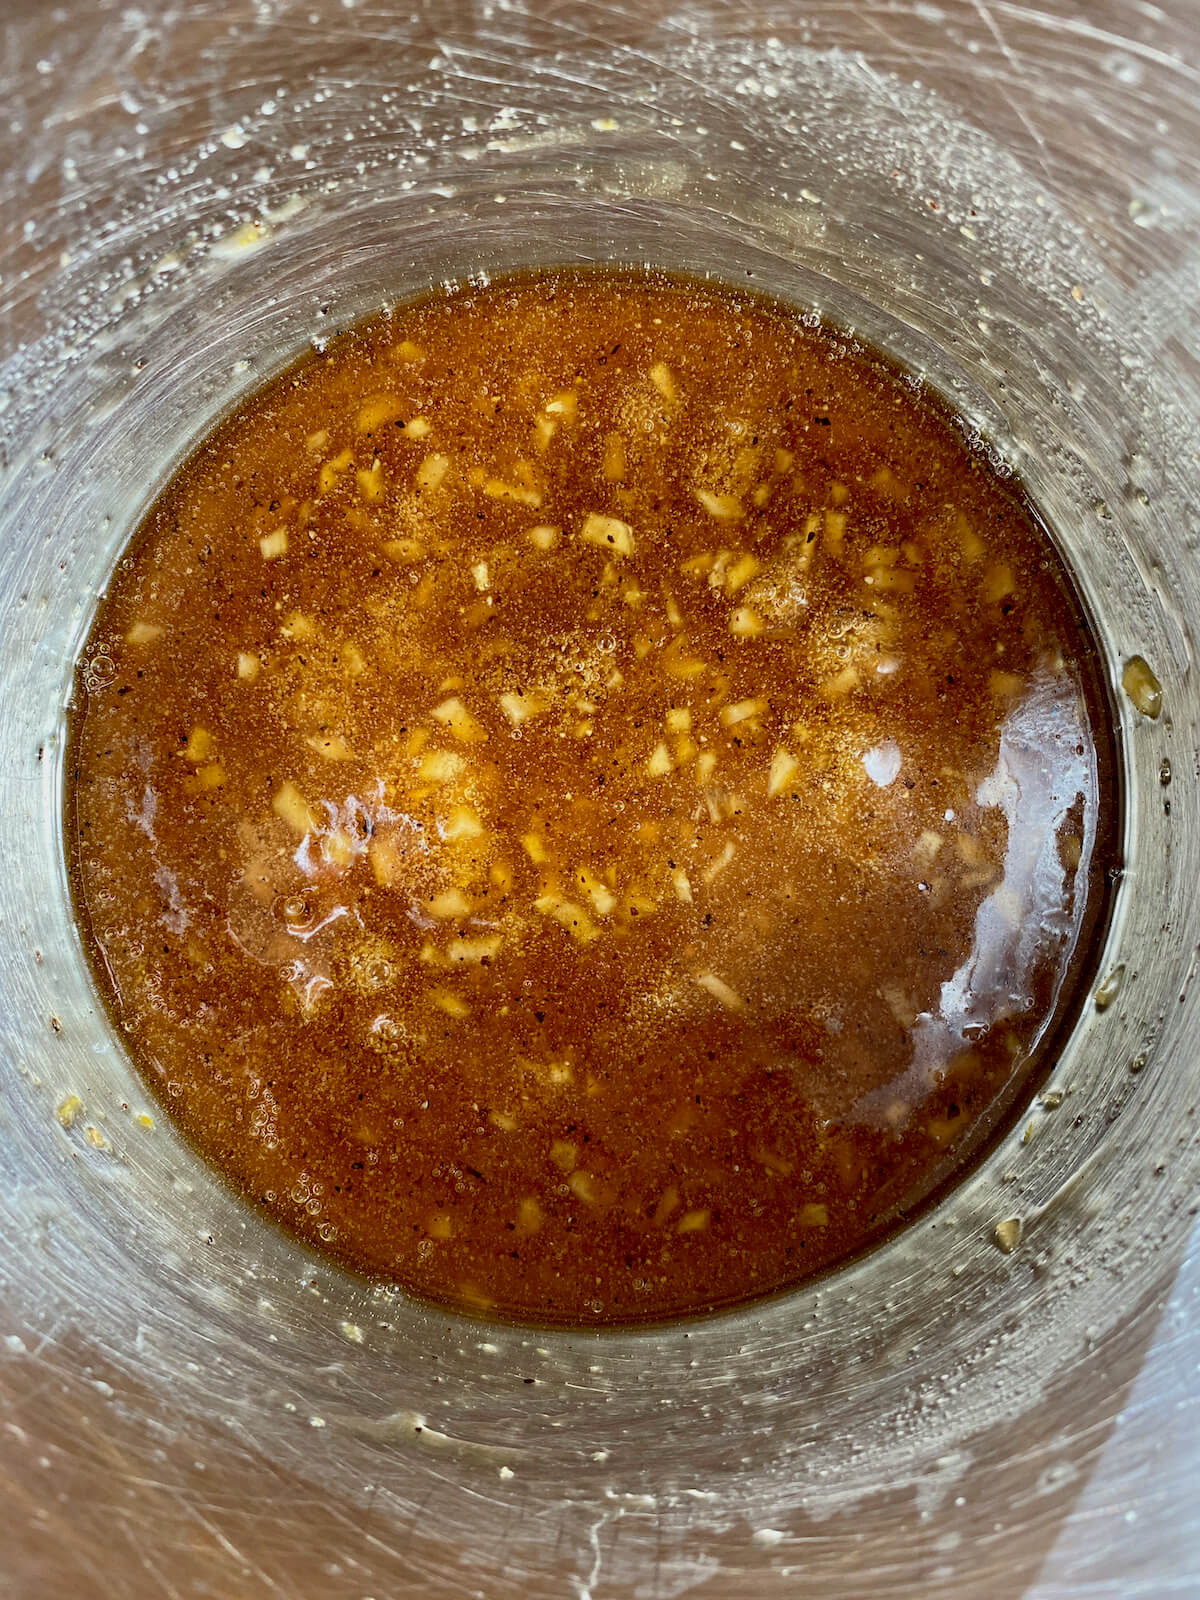 The finished honey lemon pepper wing glaze.